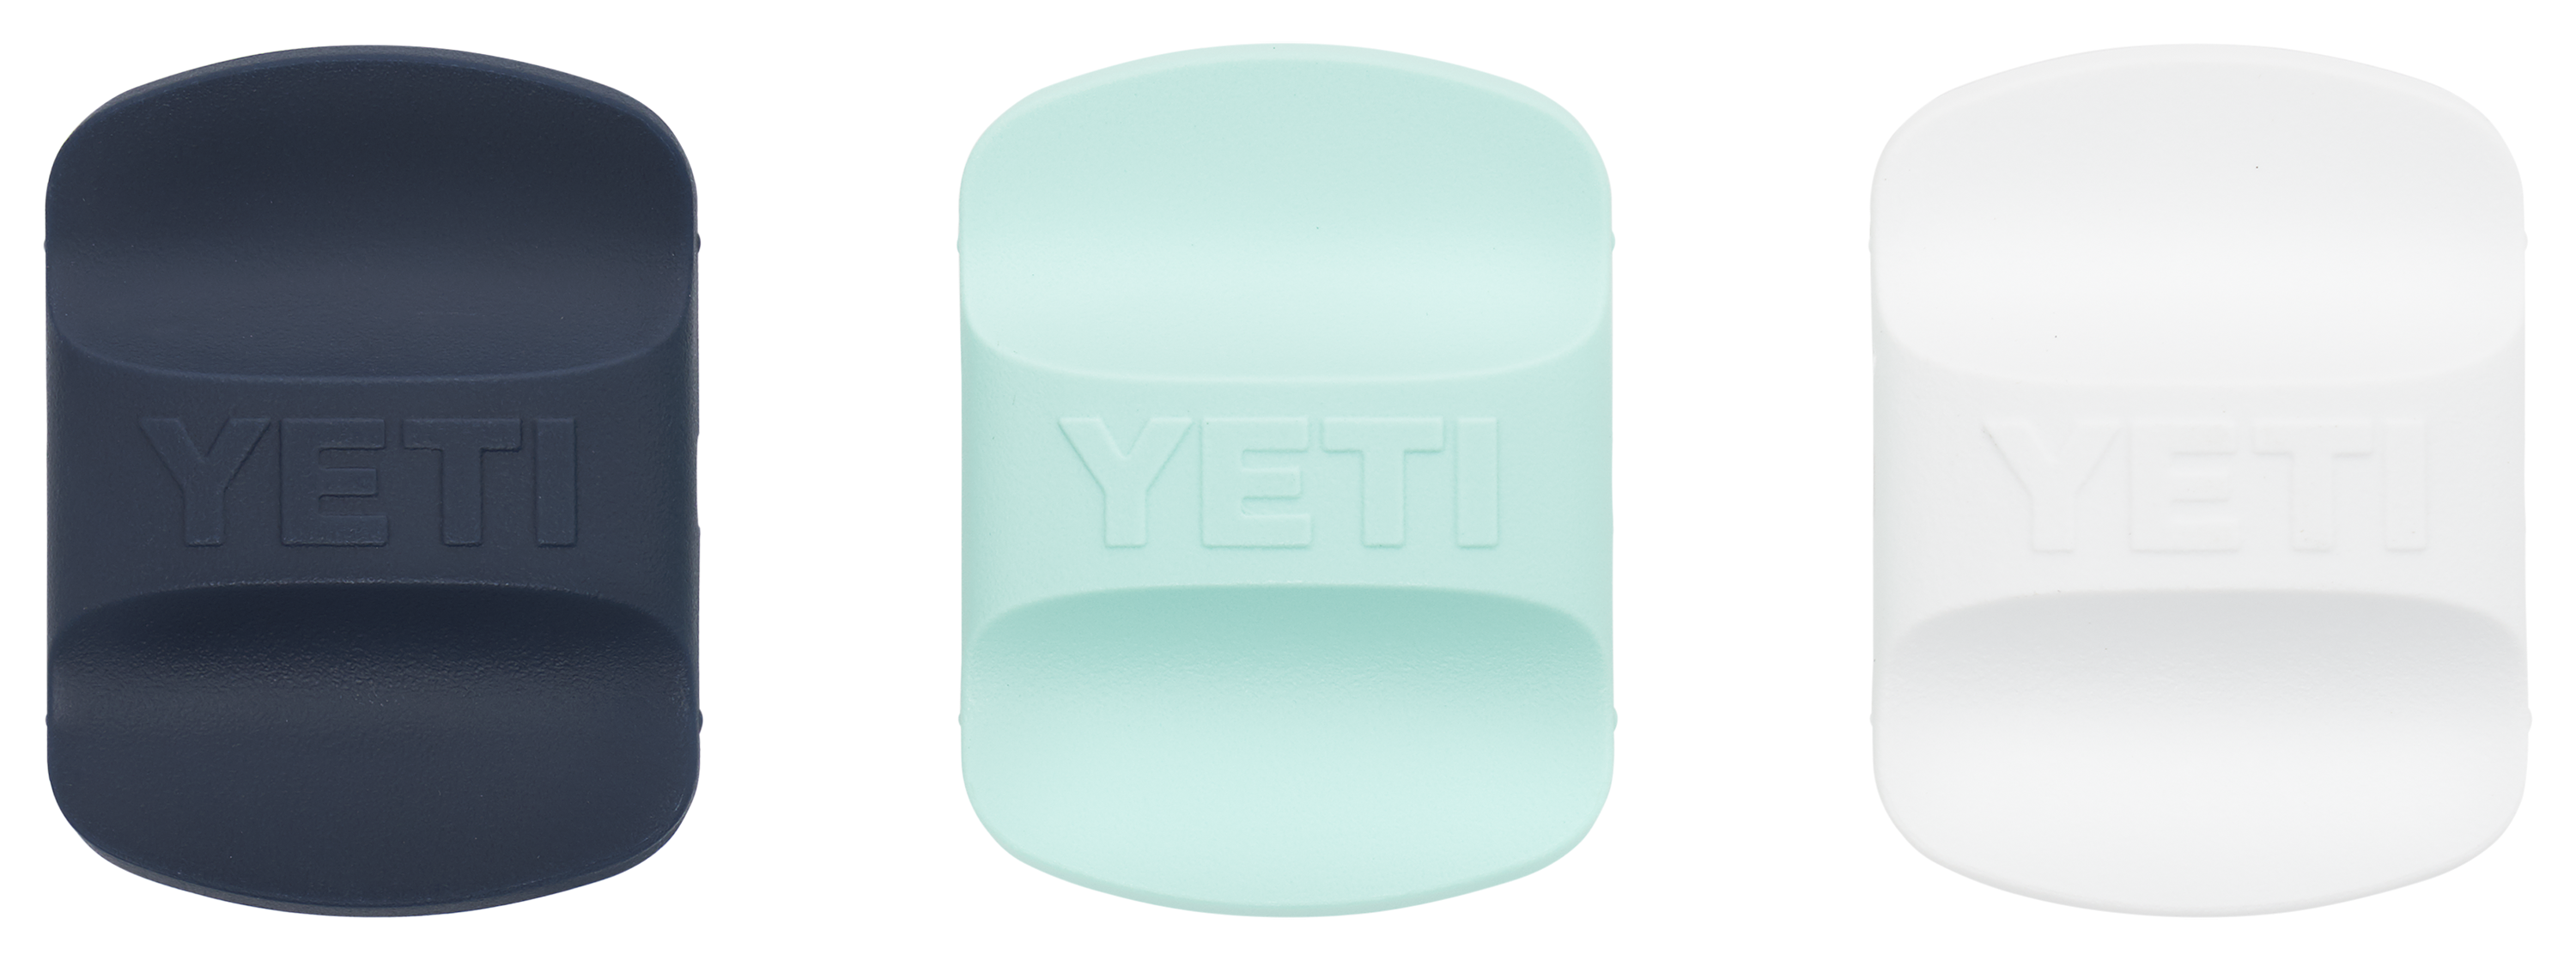 YETI® RAMBLER 42 oz. Mug with Straw Lid